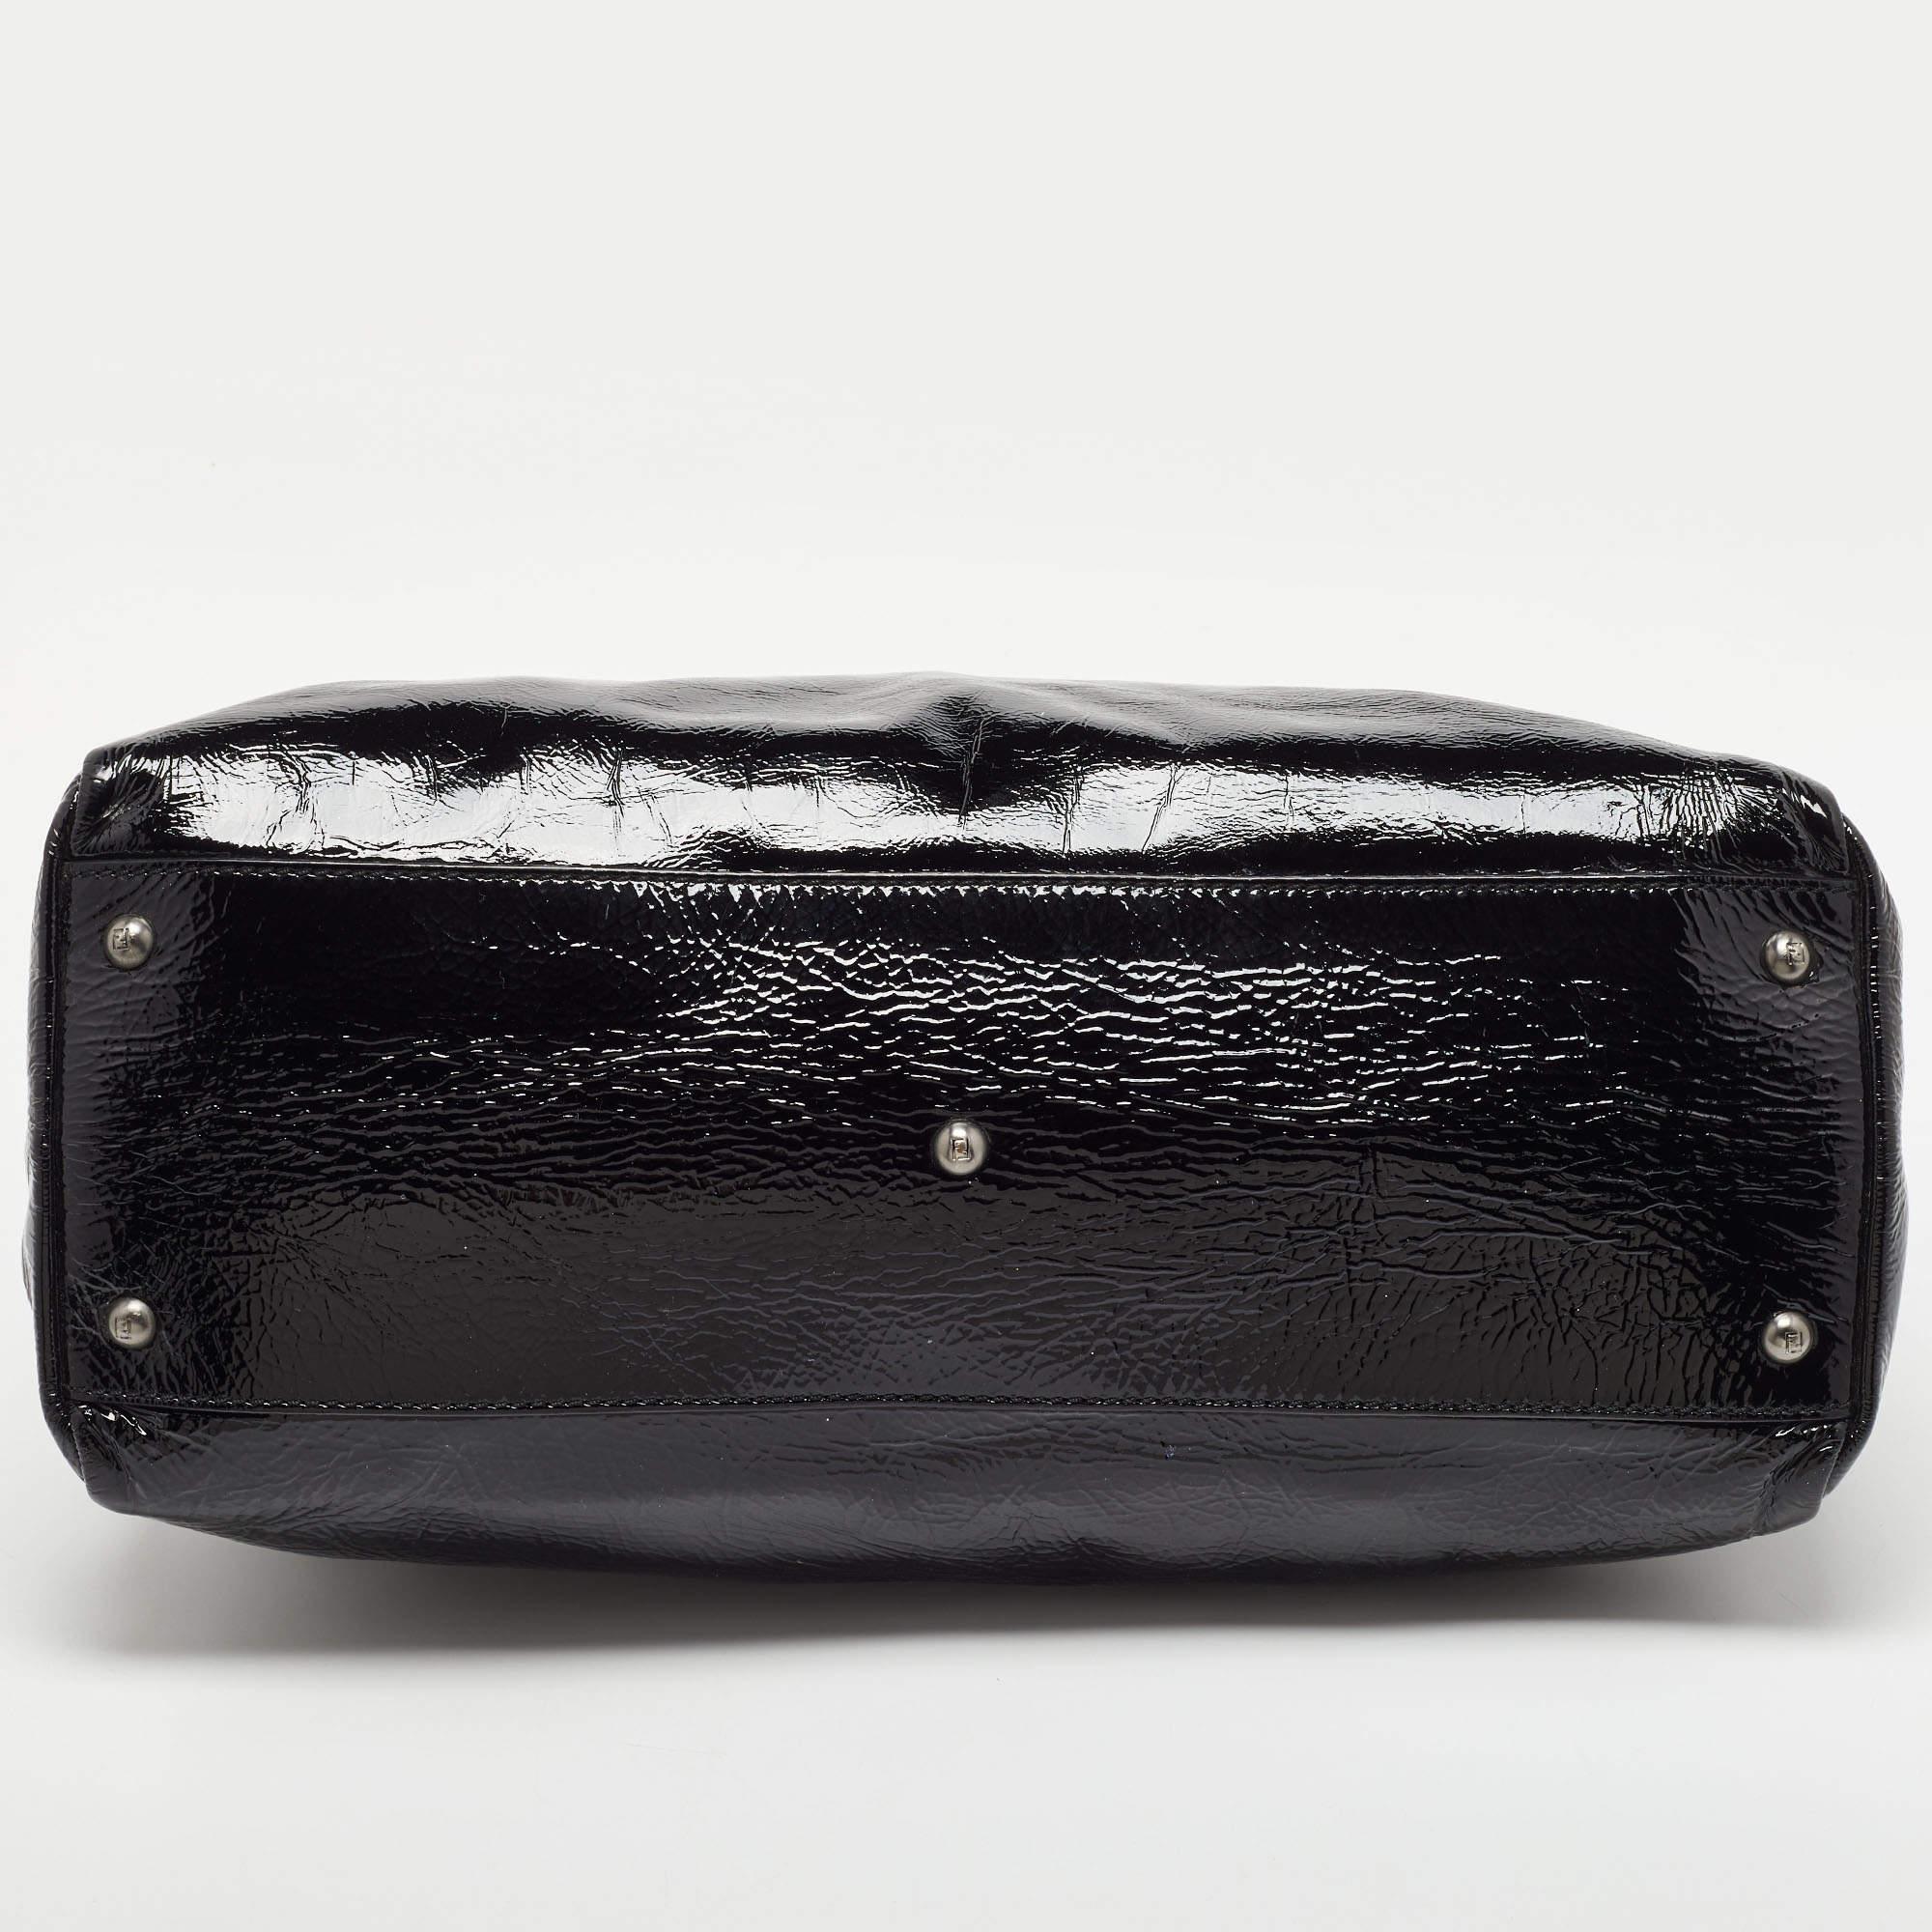 Fendi Black Patent Leather Large Peekaboo Top Handle Bag 1